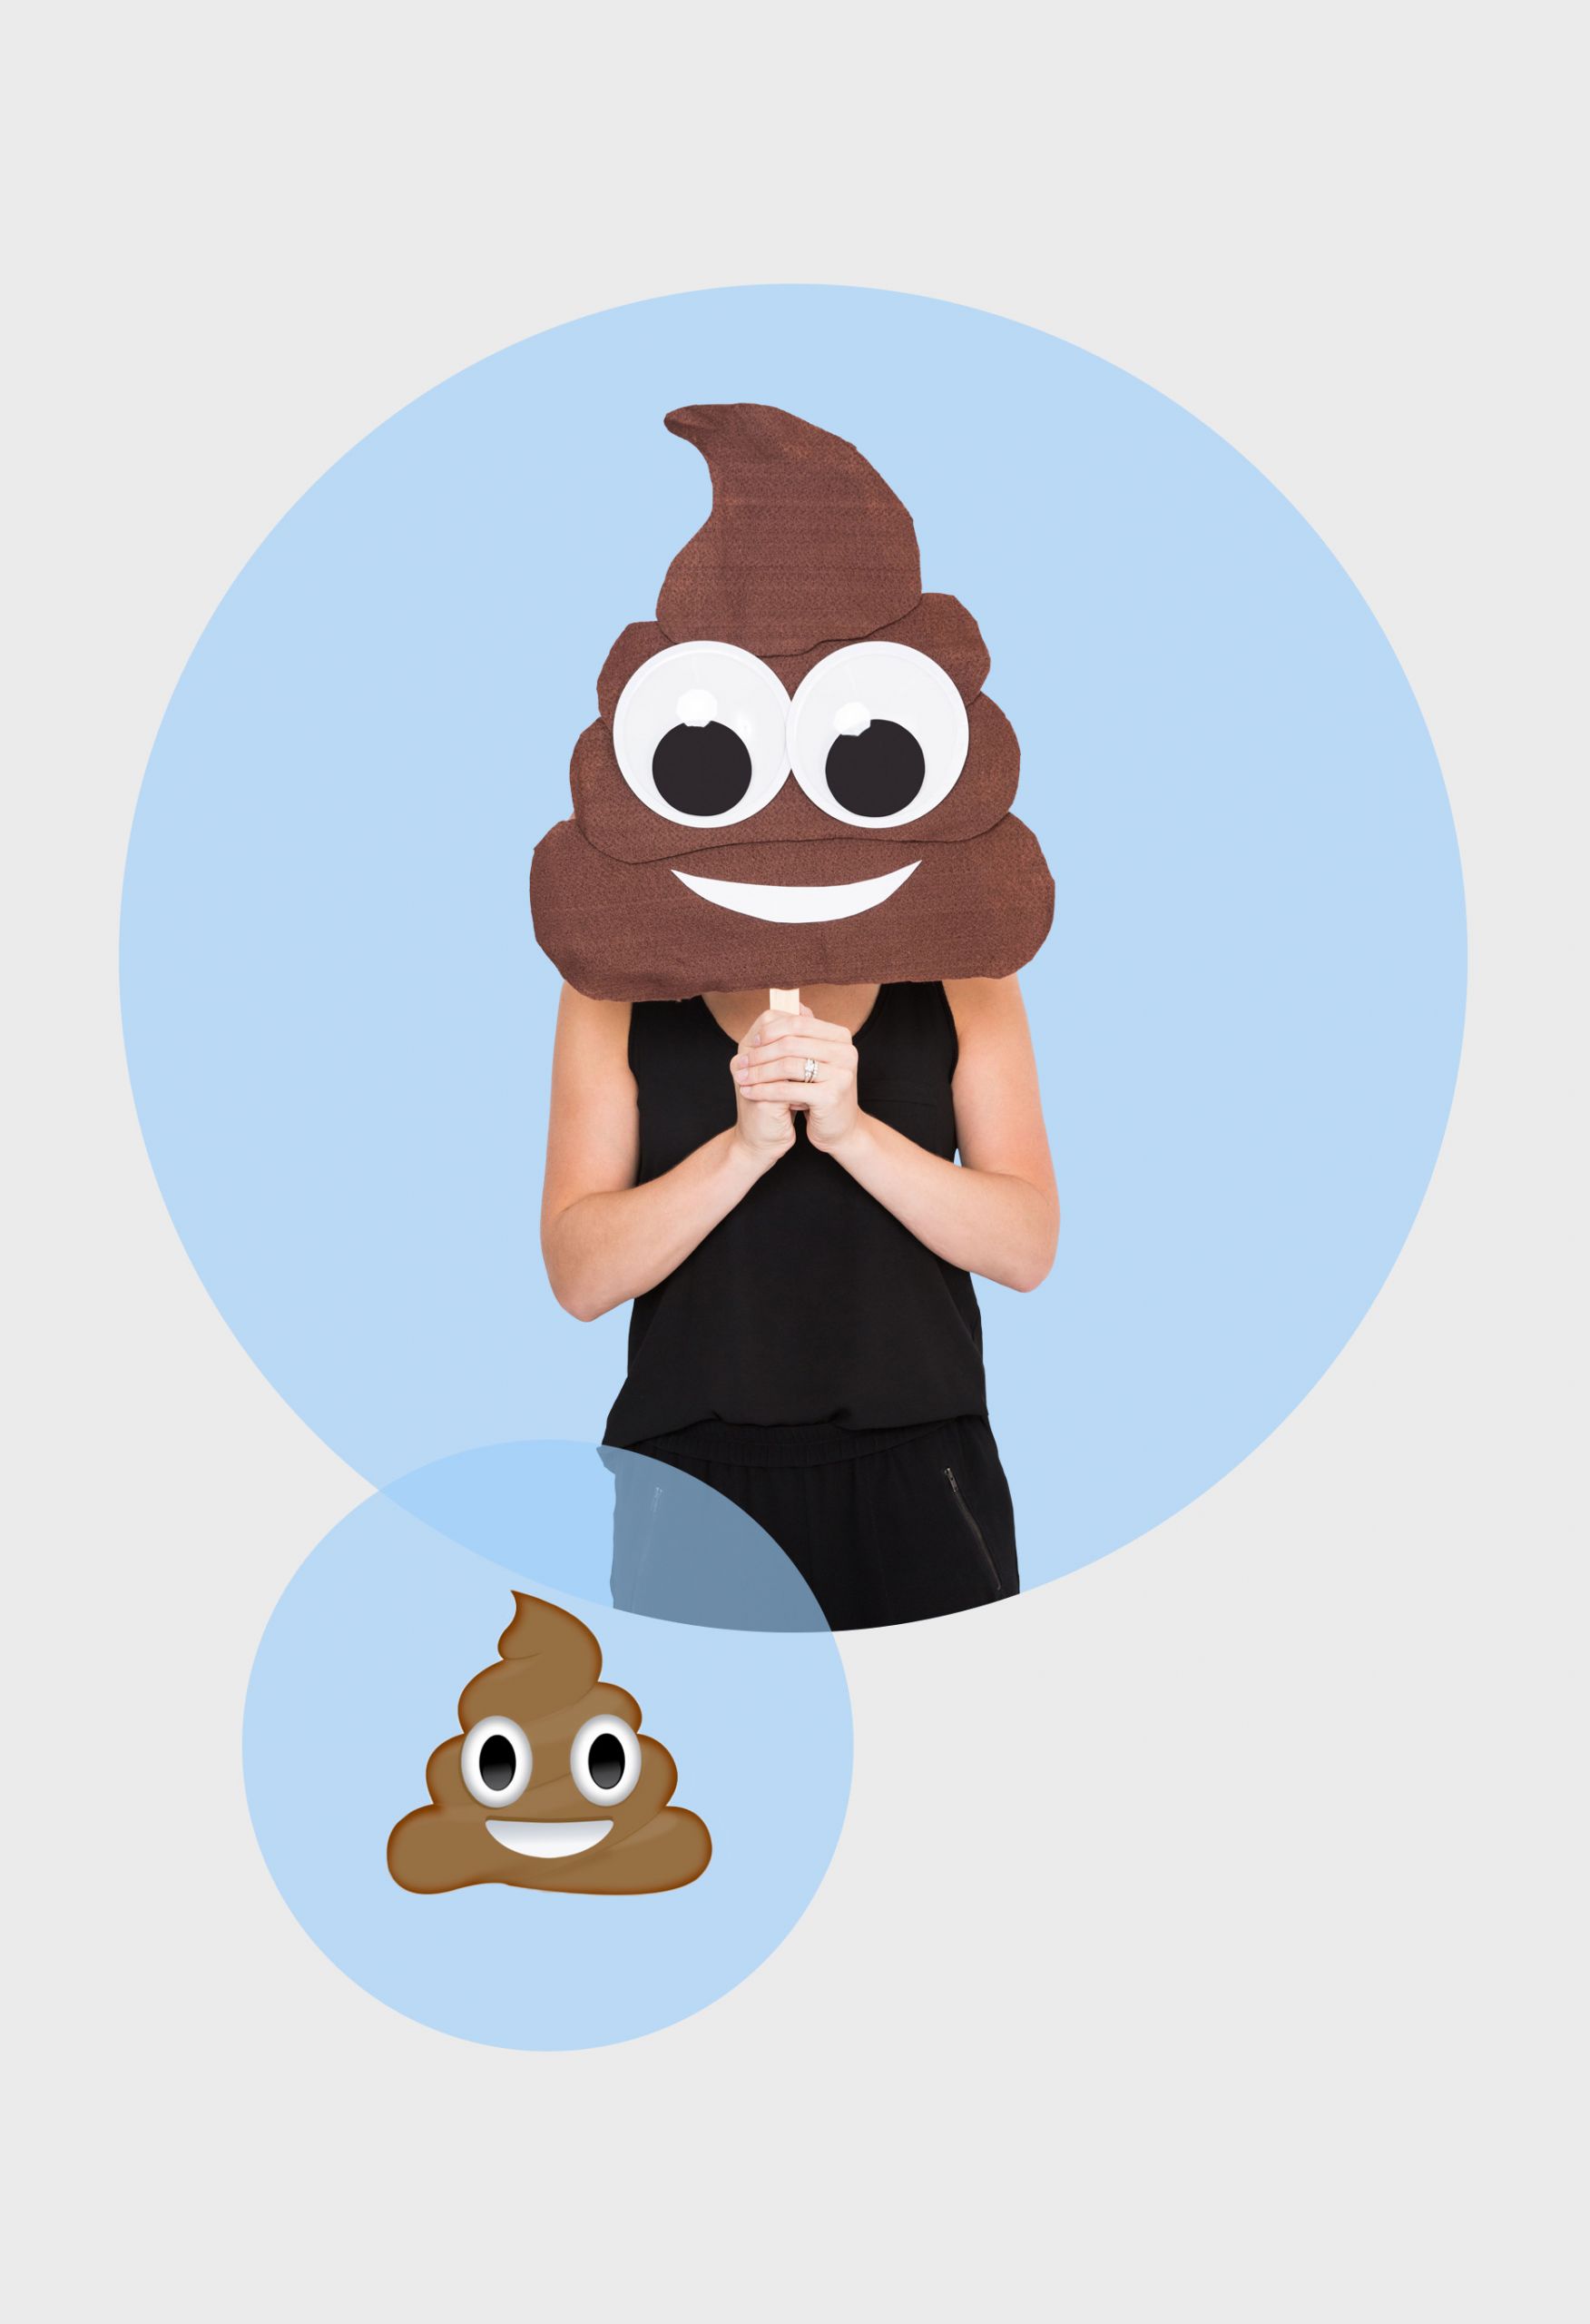 Poop Emoji Costume DIY
 26 DIY Emoji Costumes for Halloween 2017 Great Ideas for